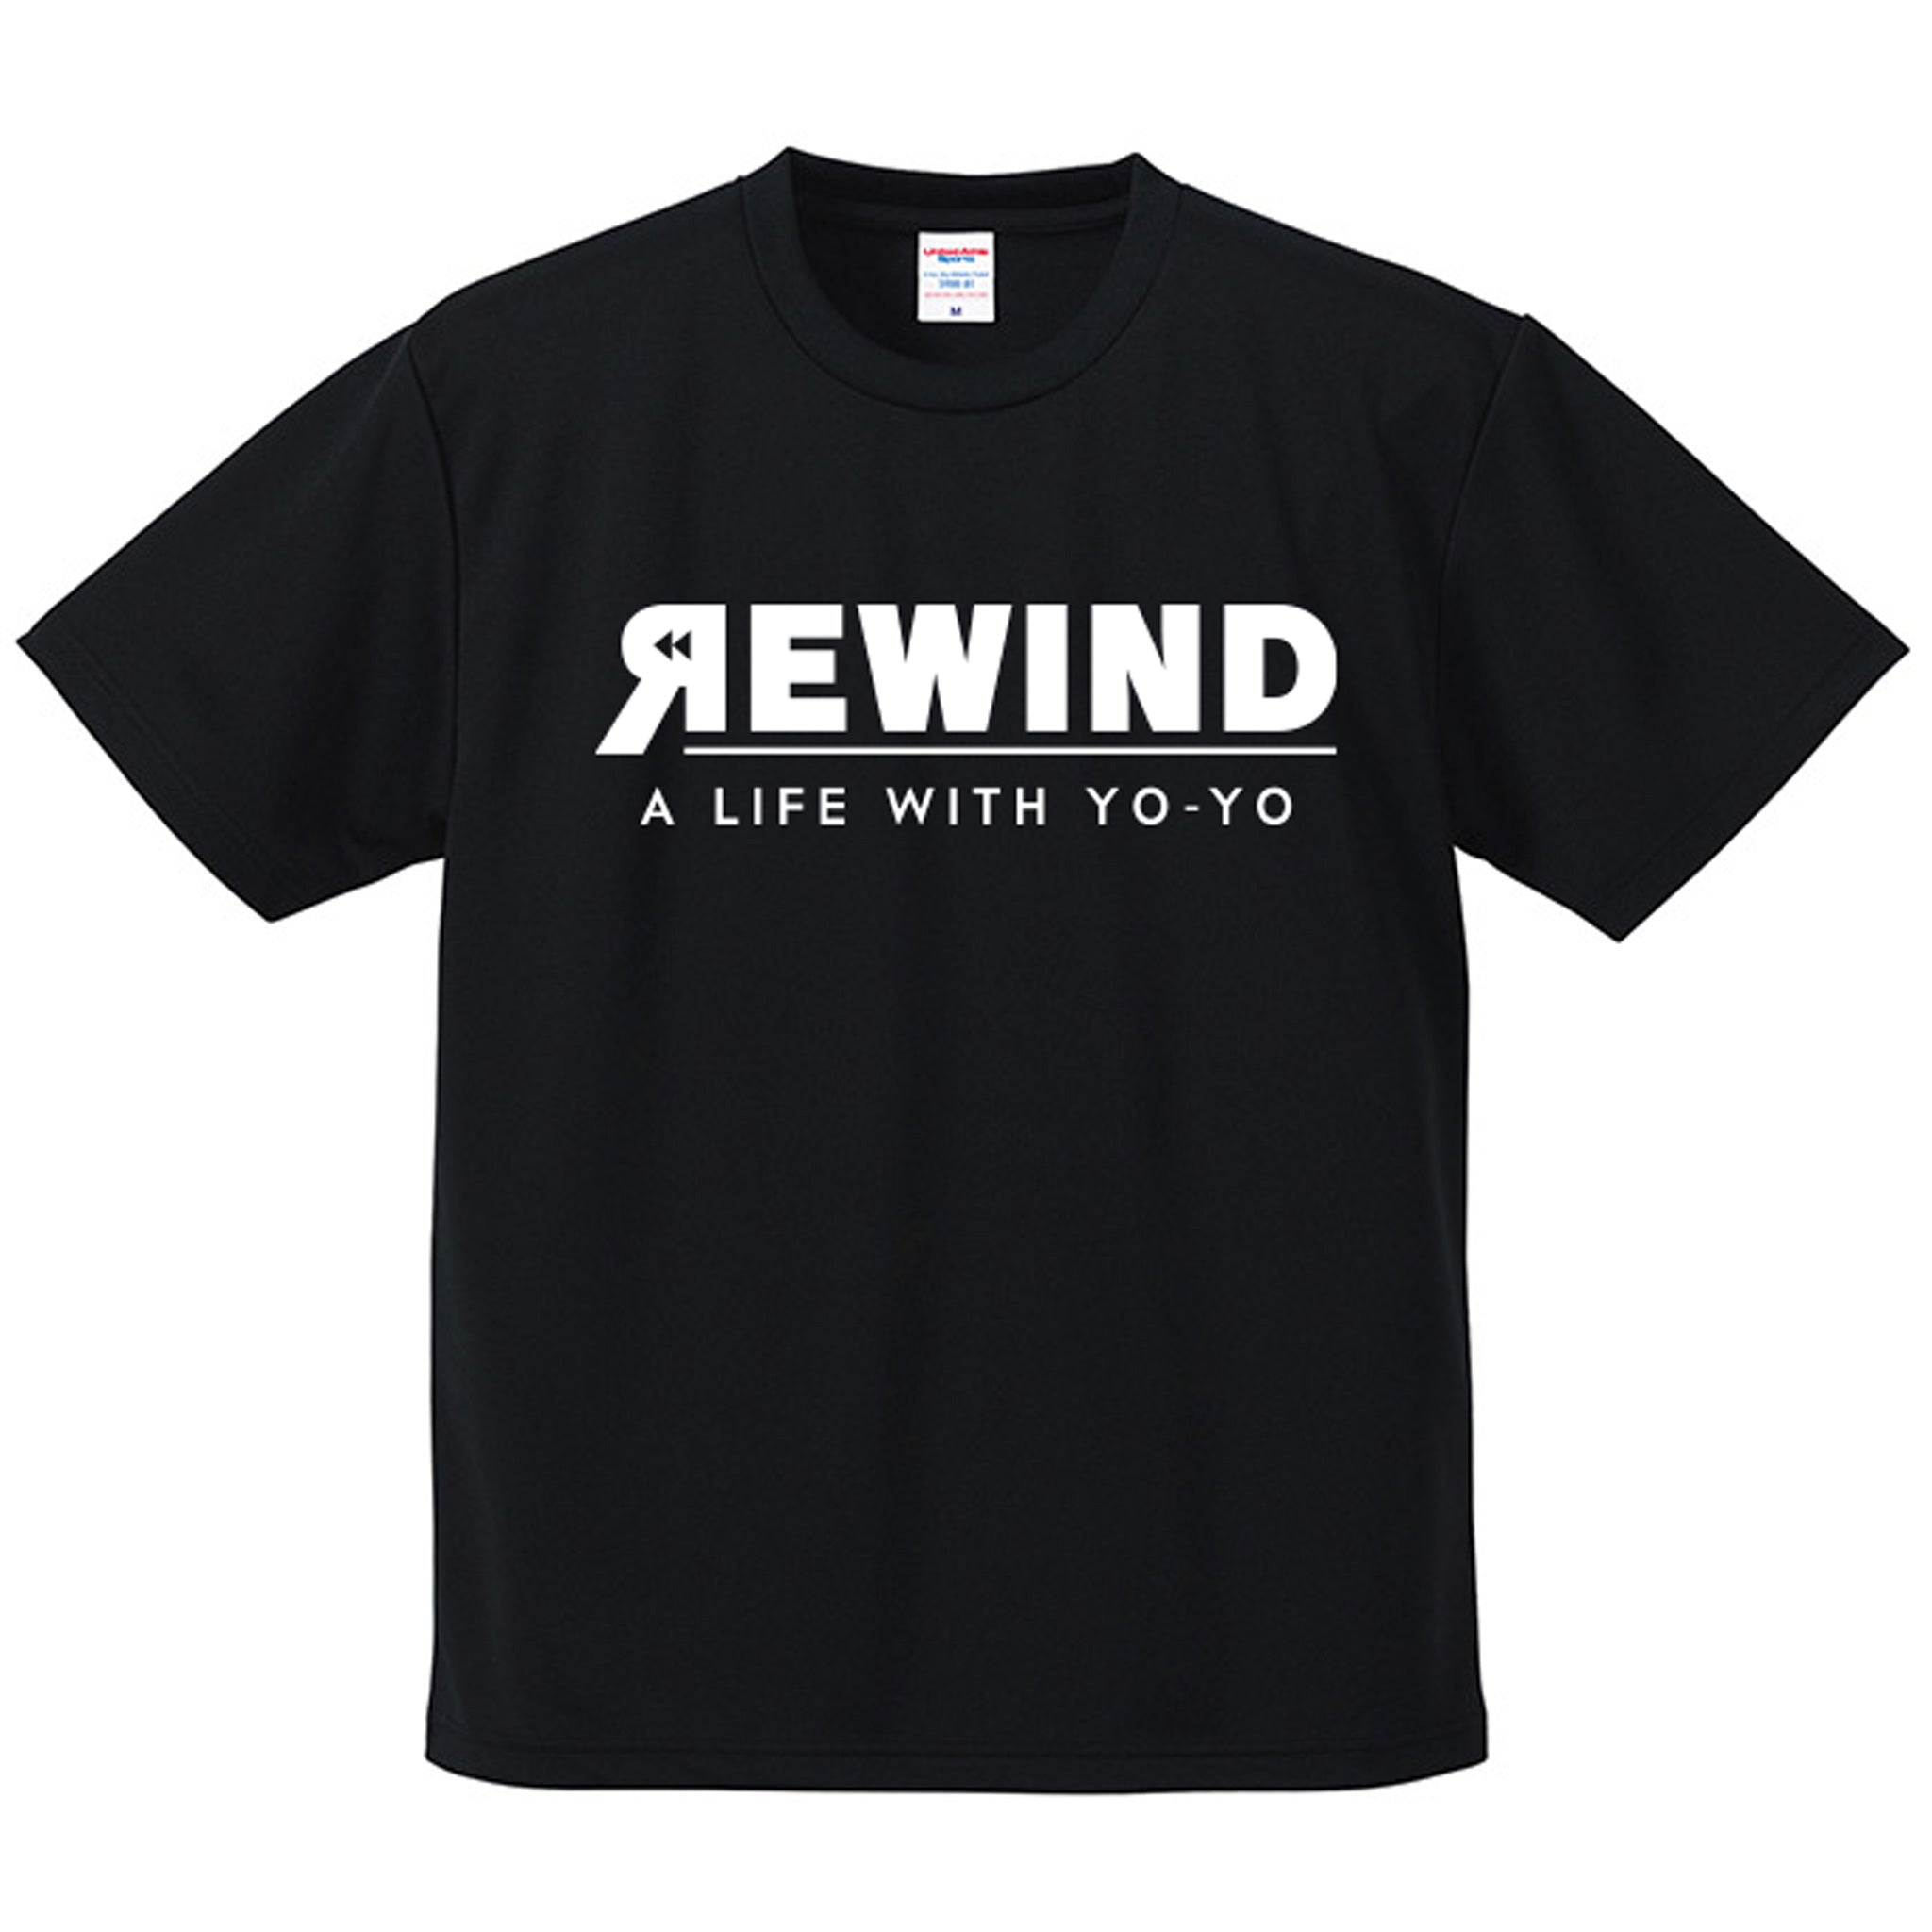 REWIND -A LIFE WITH YO-YO- ドライTシャツ (ブラック / ホワイトロゴ)